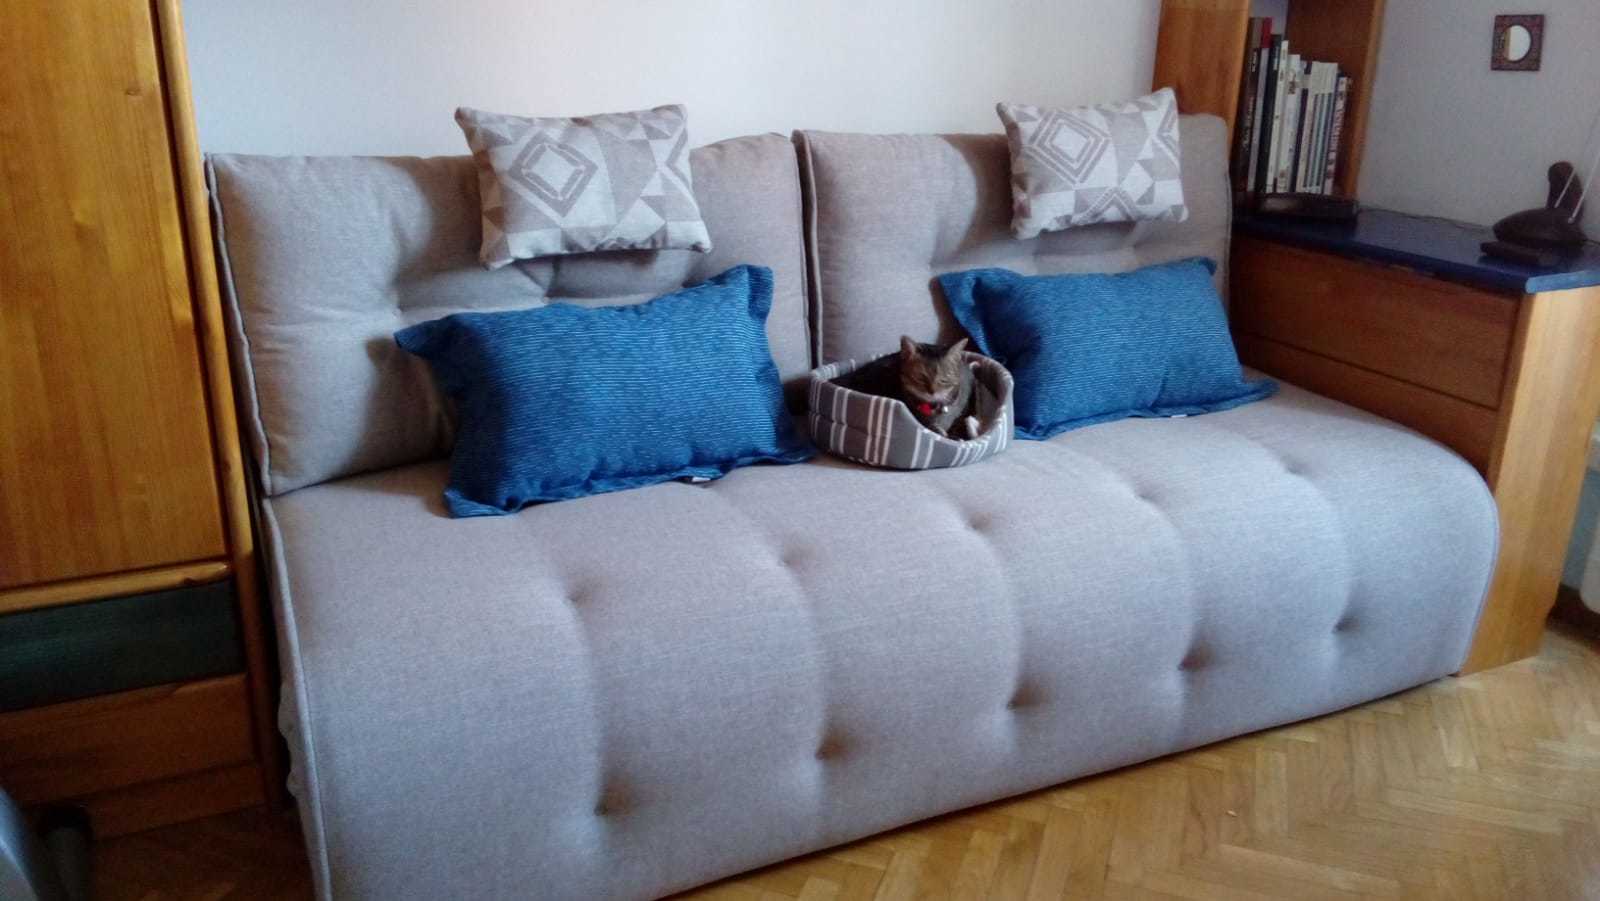 fama box sofa bed